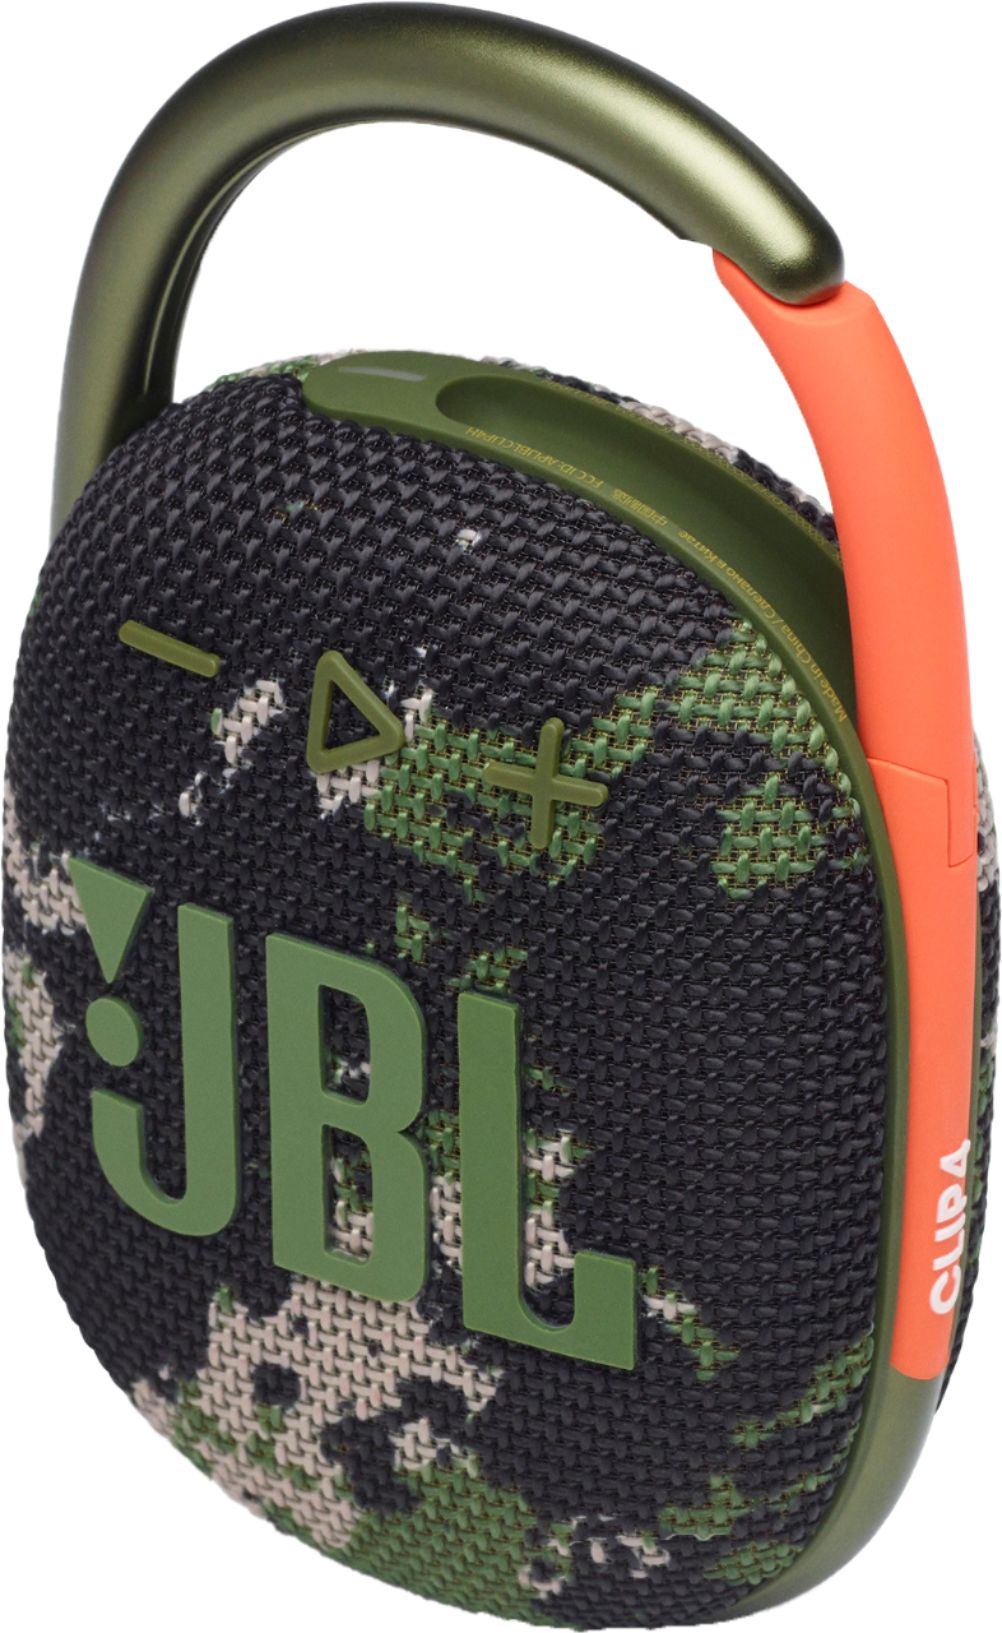 JBL CLIP4 Portable Bluetooth Speaker Gray JBLCLIP4GRYAM - Best Buy